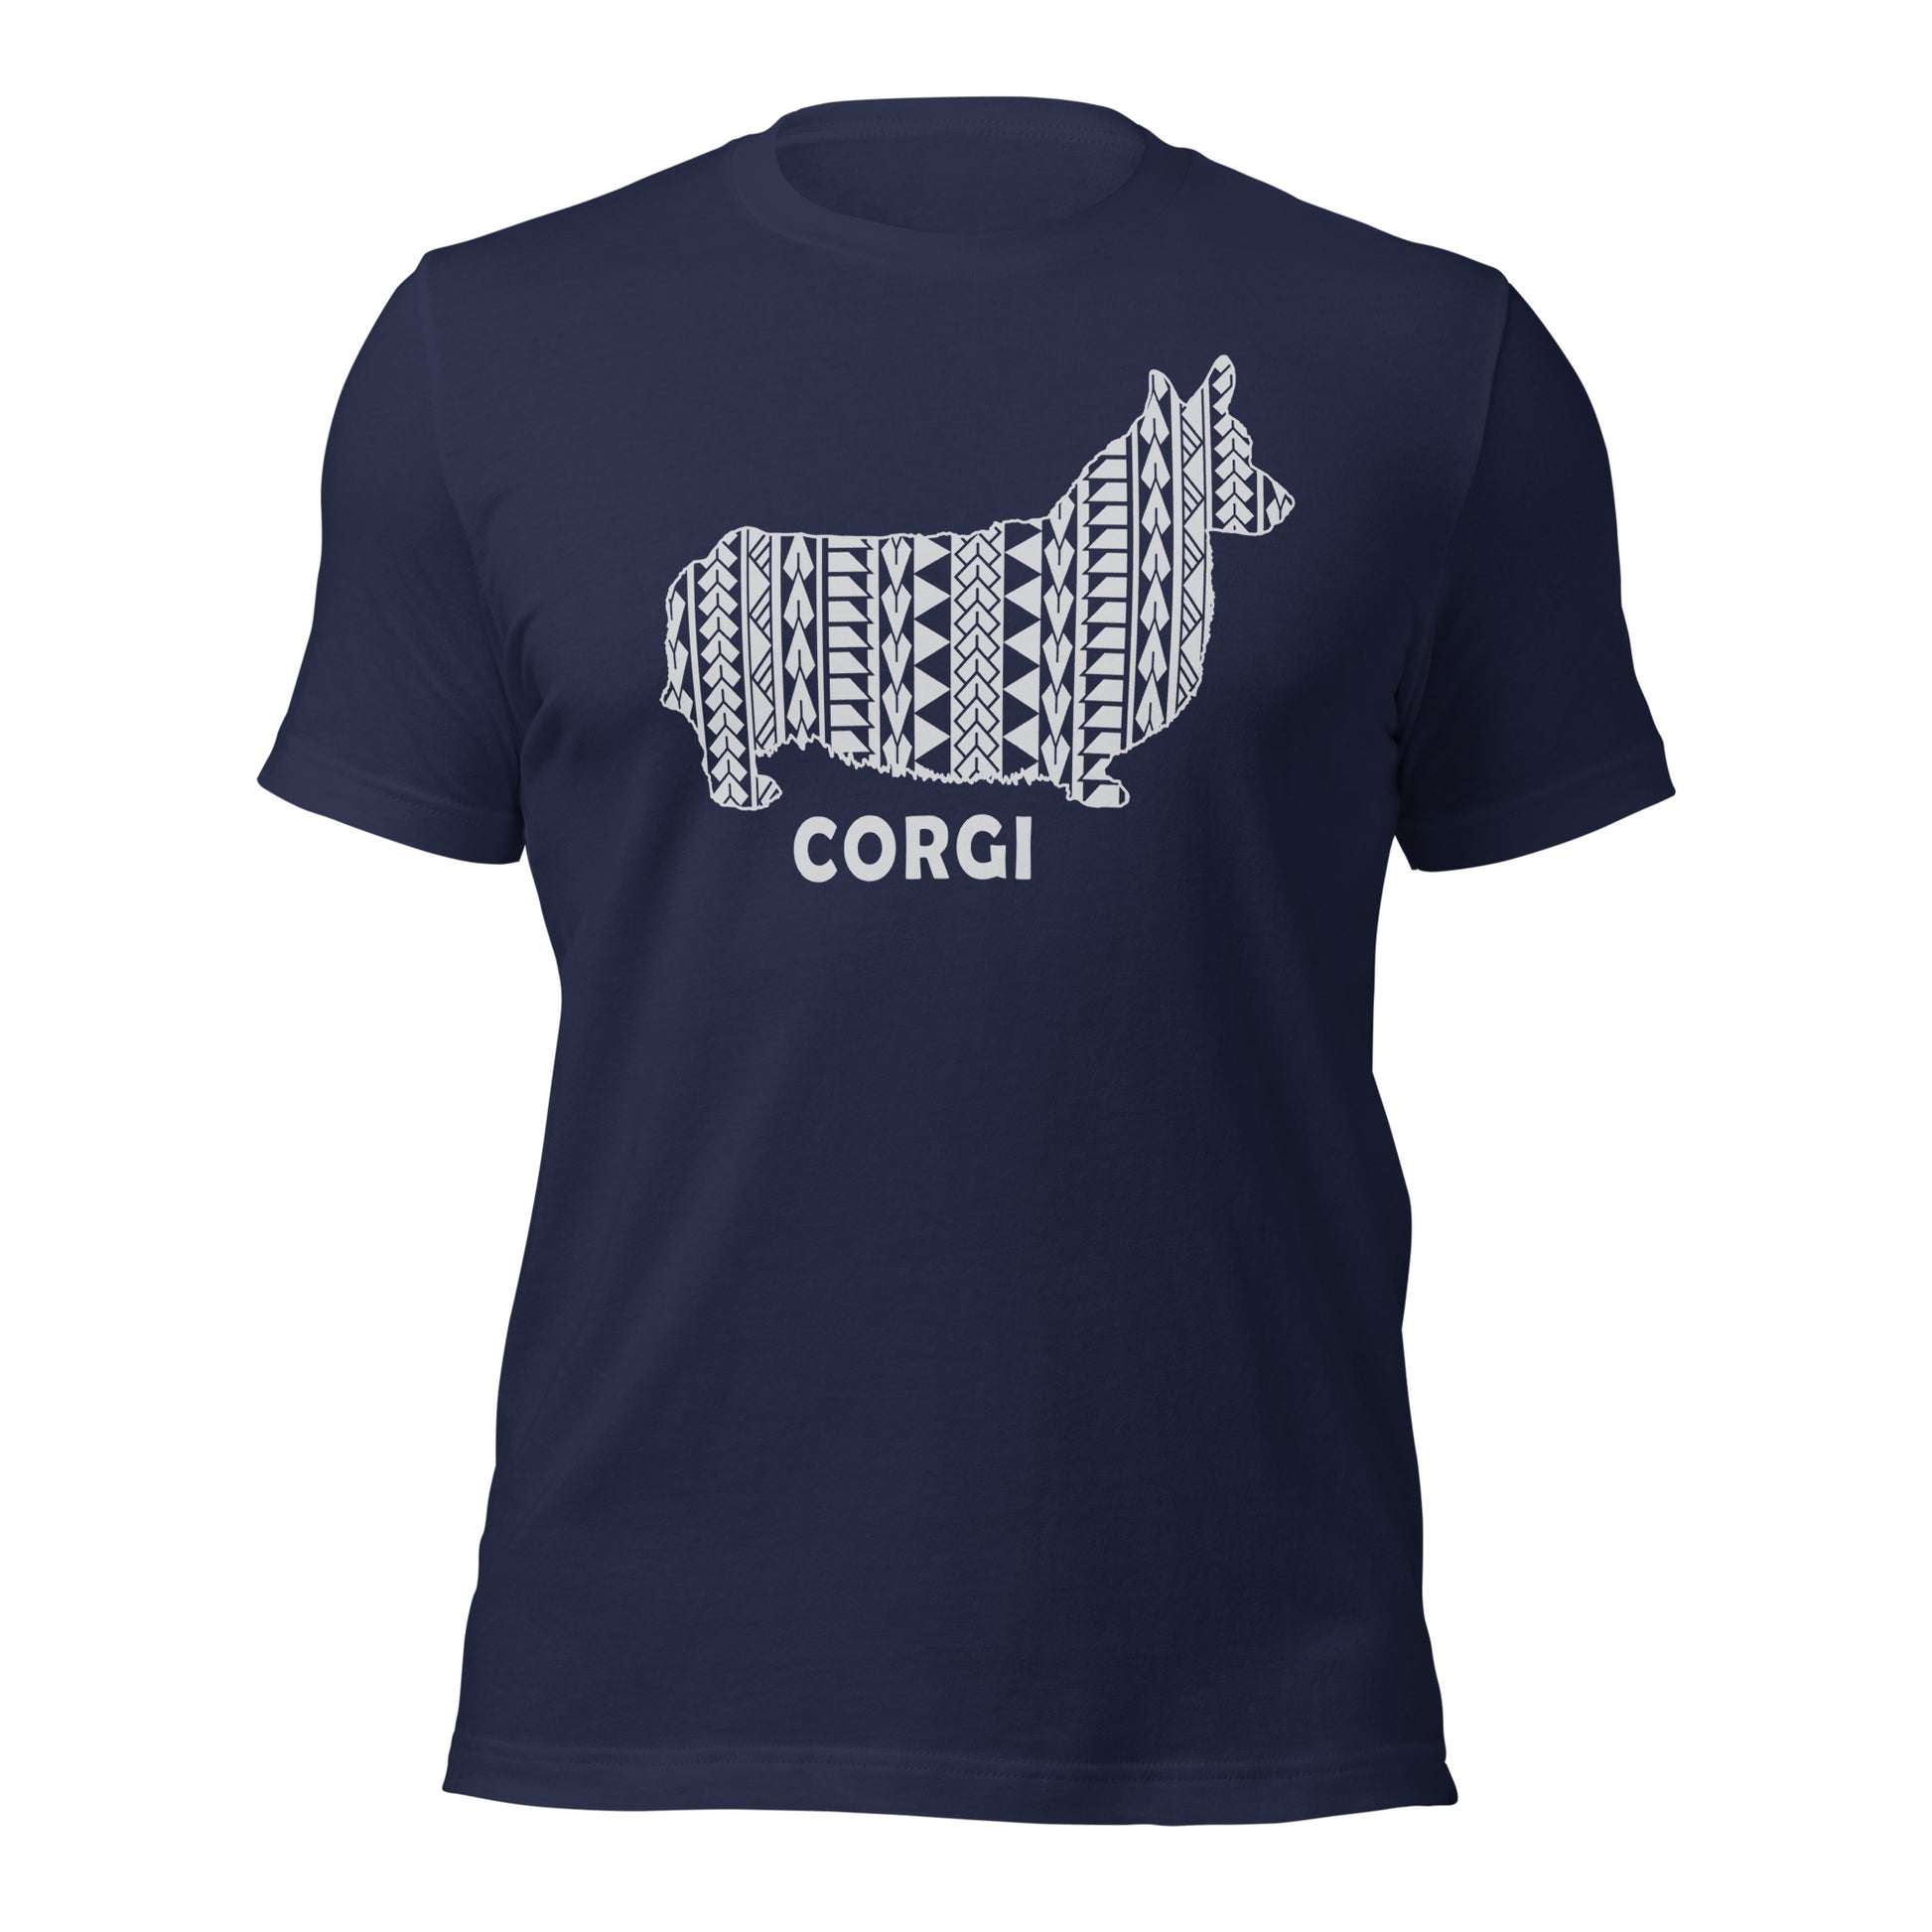 Corgi Polynesian t-shirt navy by Dog Artistry.